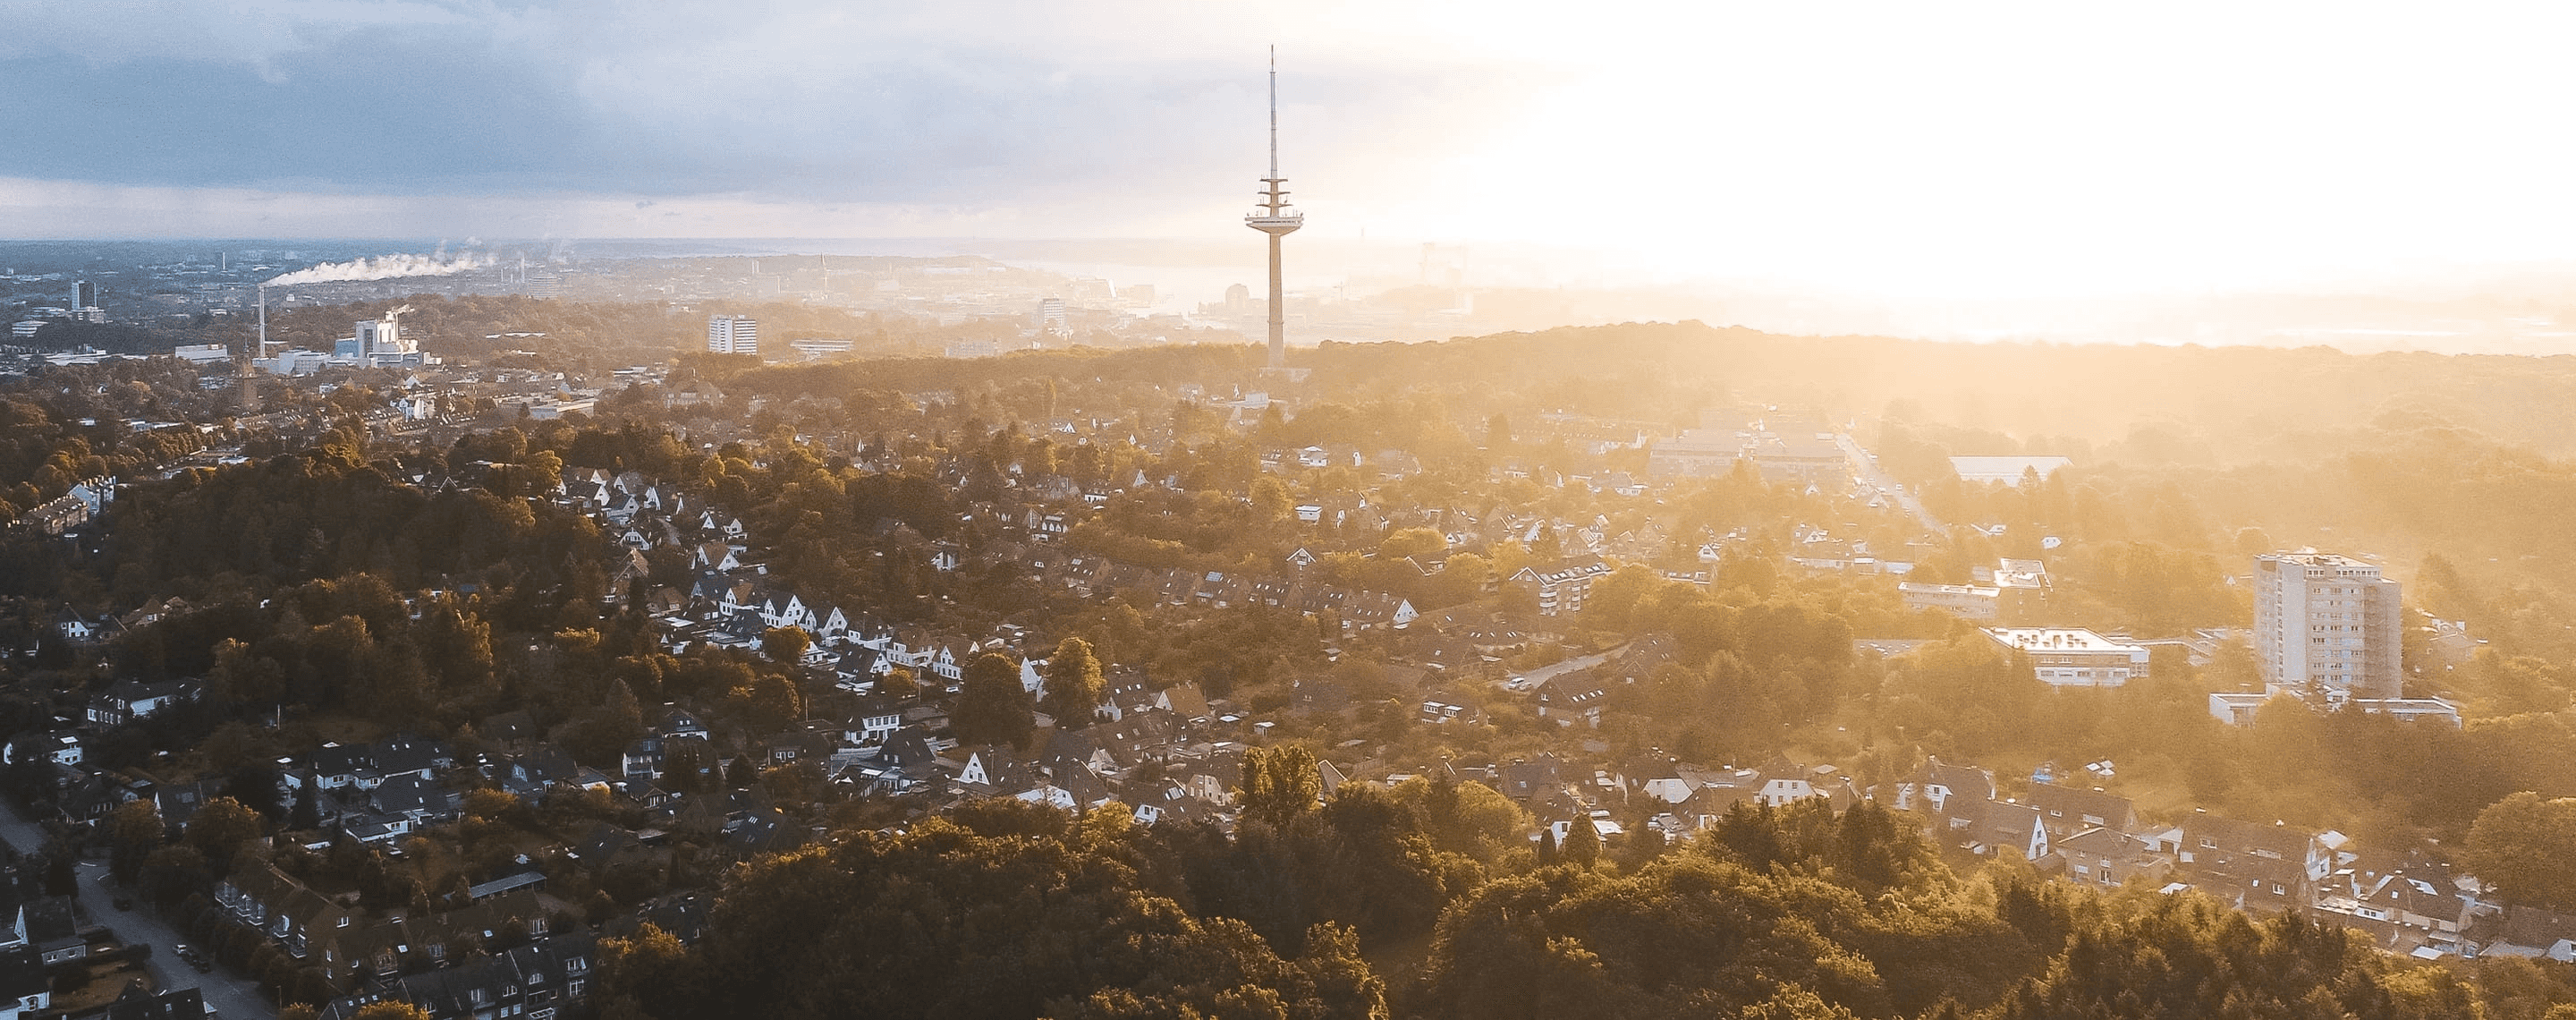 Panoramablick auf Kiel mit Fernsehturm